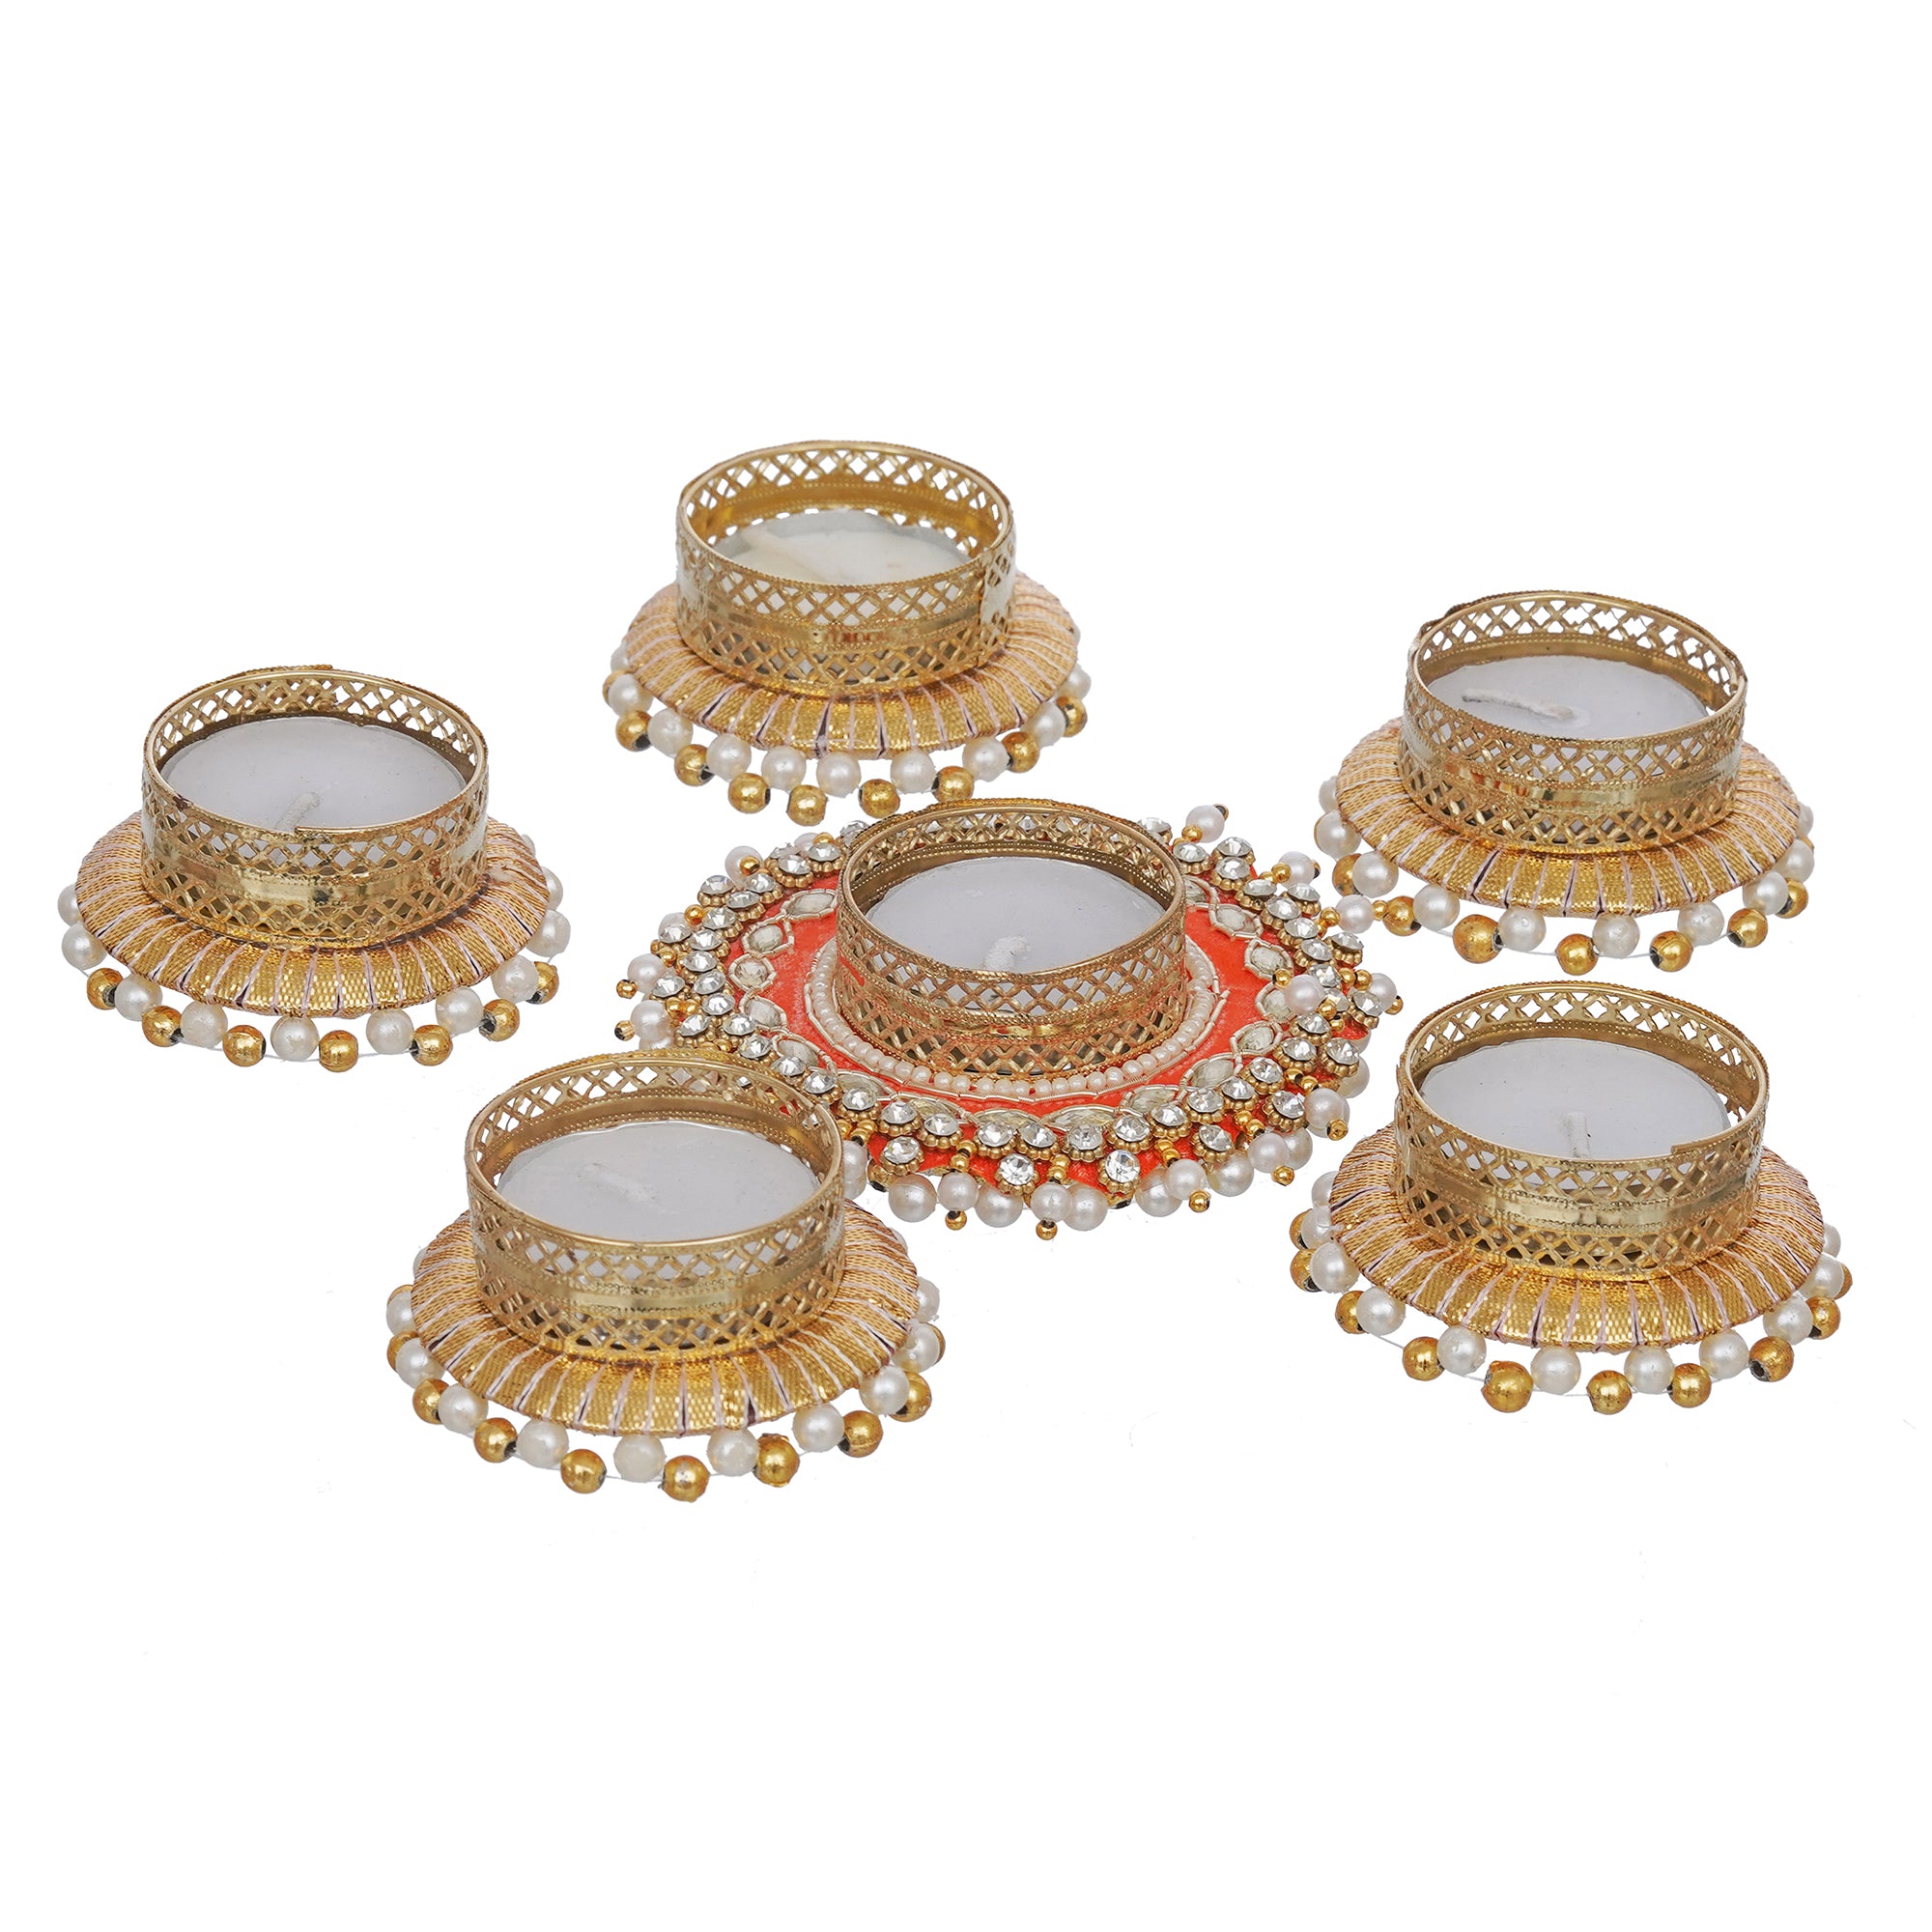 eCraftIndia Set of 6 Round Shaped Diamond Beads and Pearls Decorative Tea Light Candle Holders 8